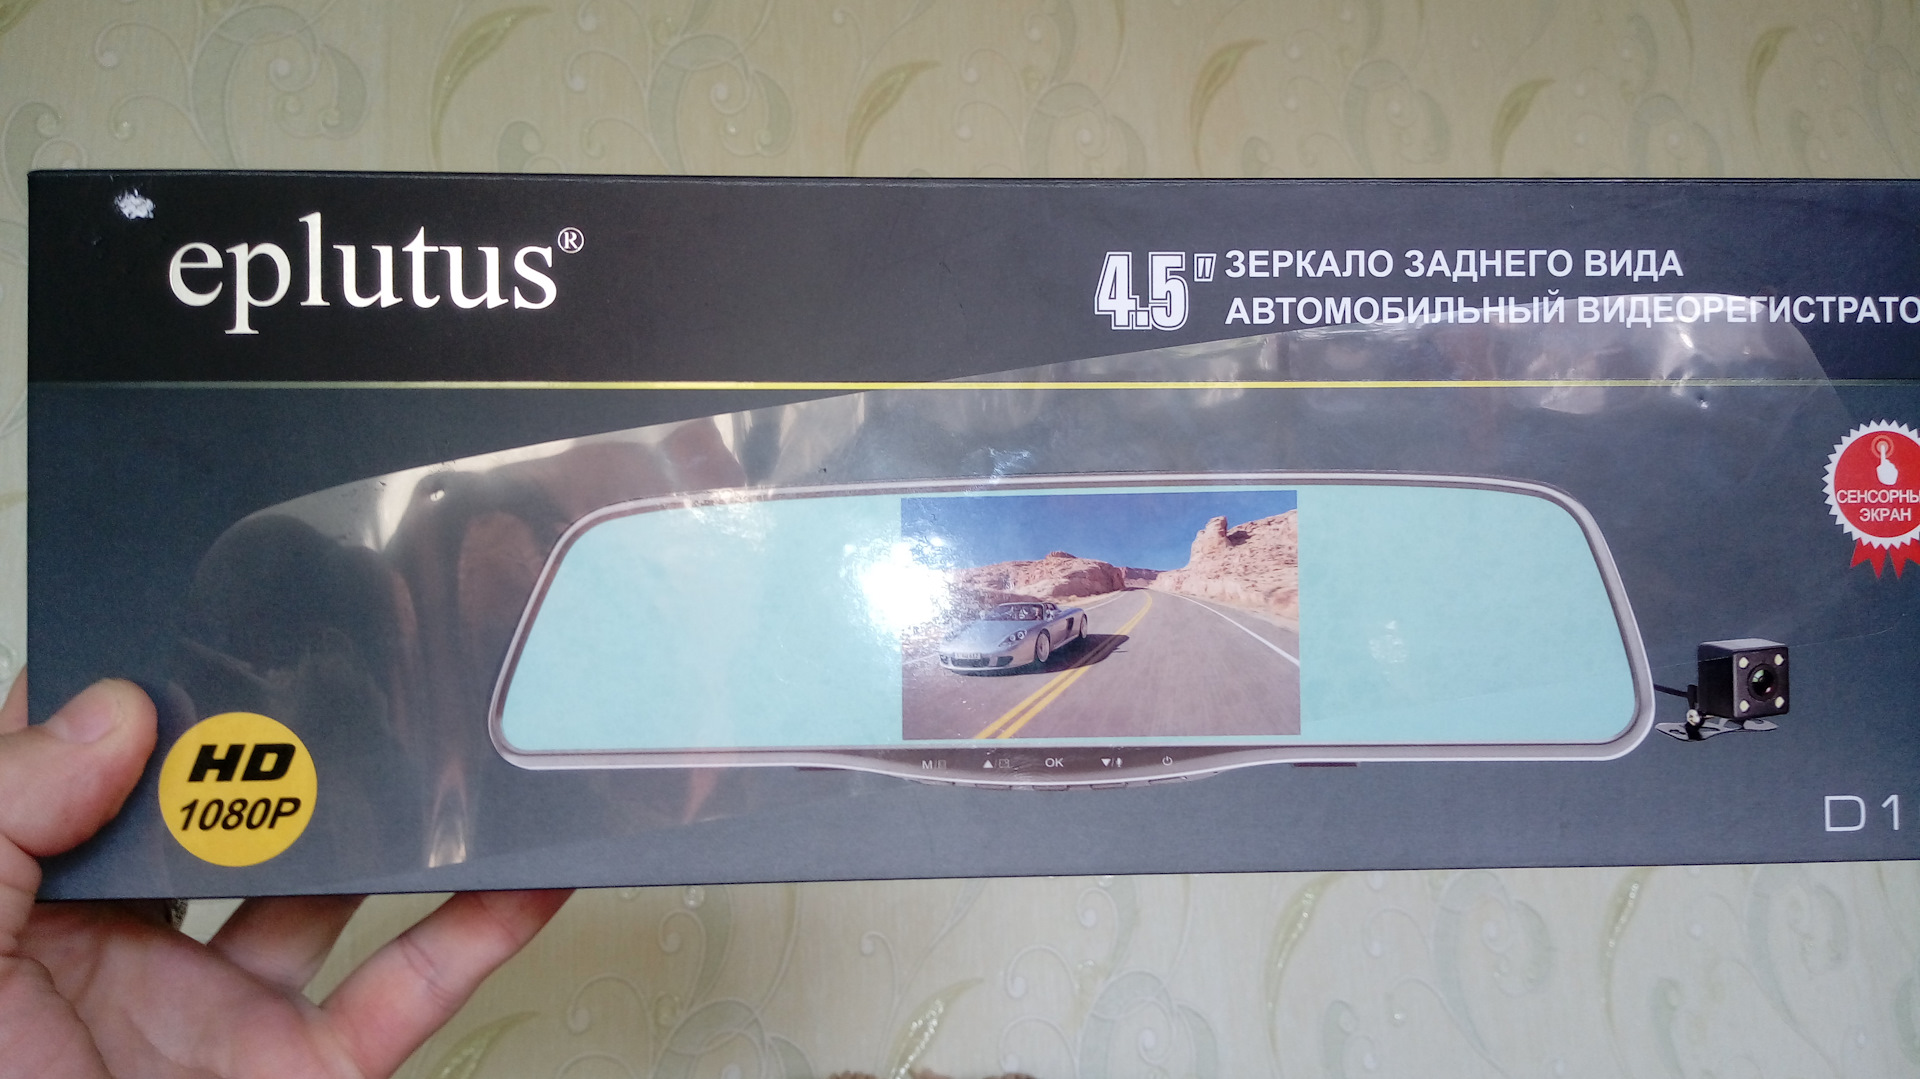 Вавада зеркало на сегодняшний день vavadajaj3. Зеркало Eplutus. Eplutus наклейка. О качестве бренд Eplutus. Фото 7 дюймового телевизора Eplutus.